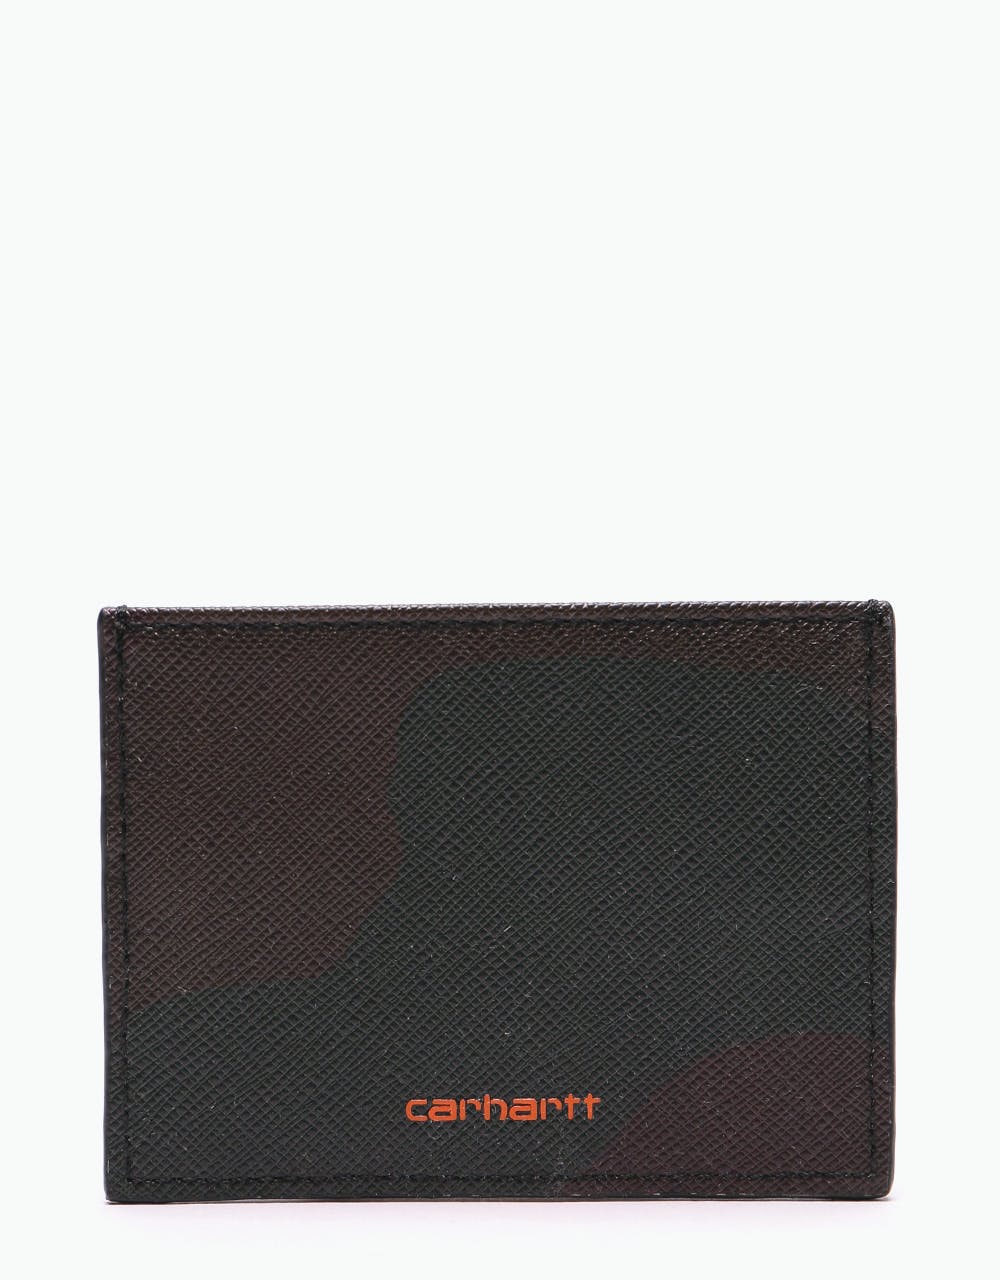 Carhartt WIP Coated Card Holder - Camo Evergreen/Brick Orange